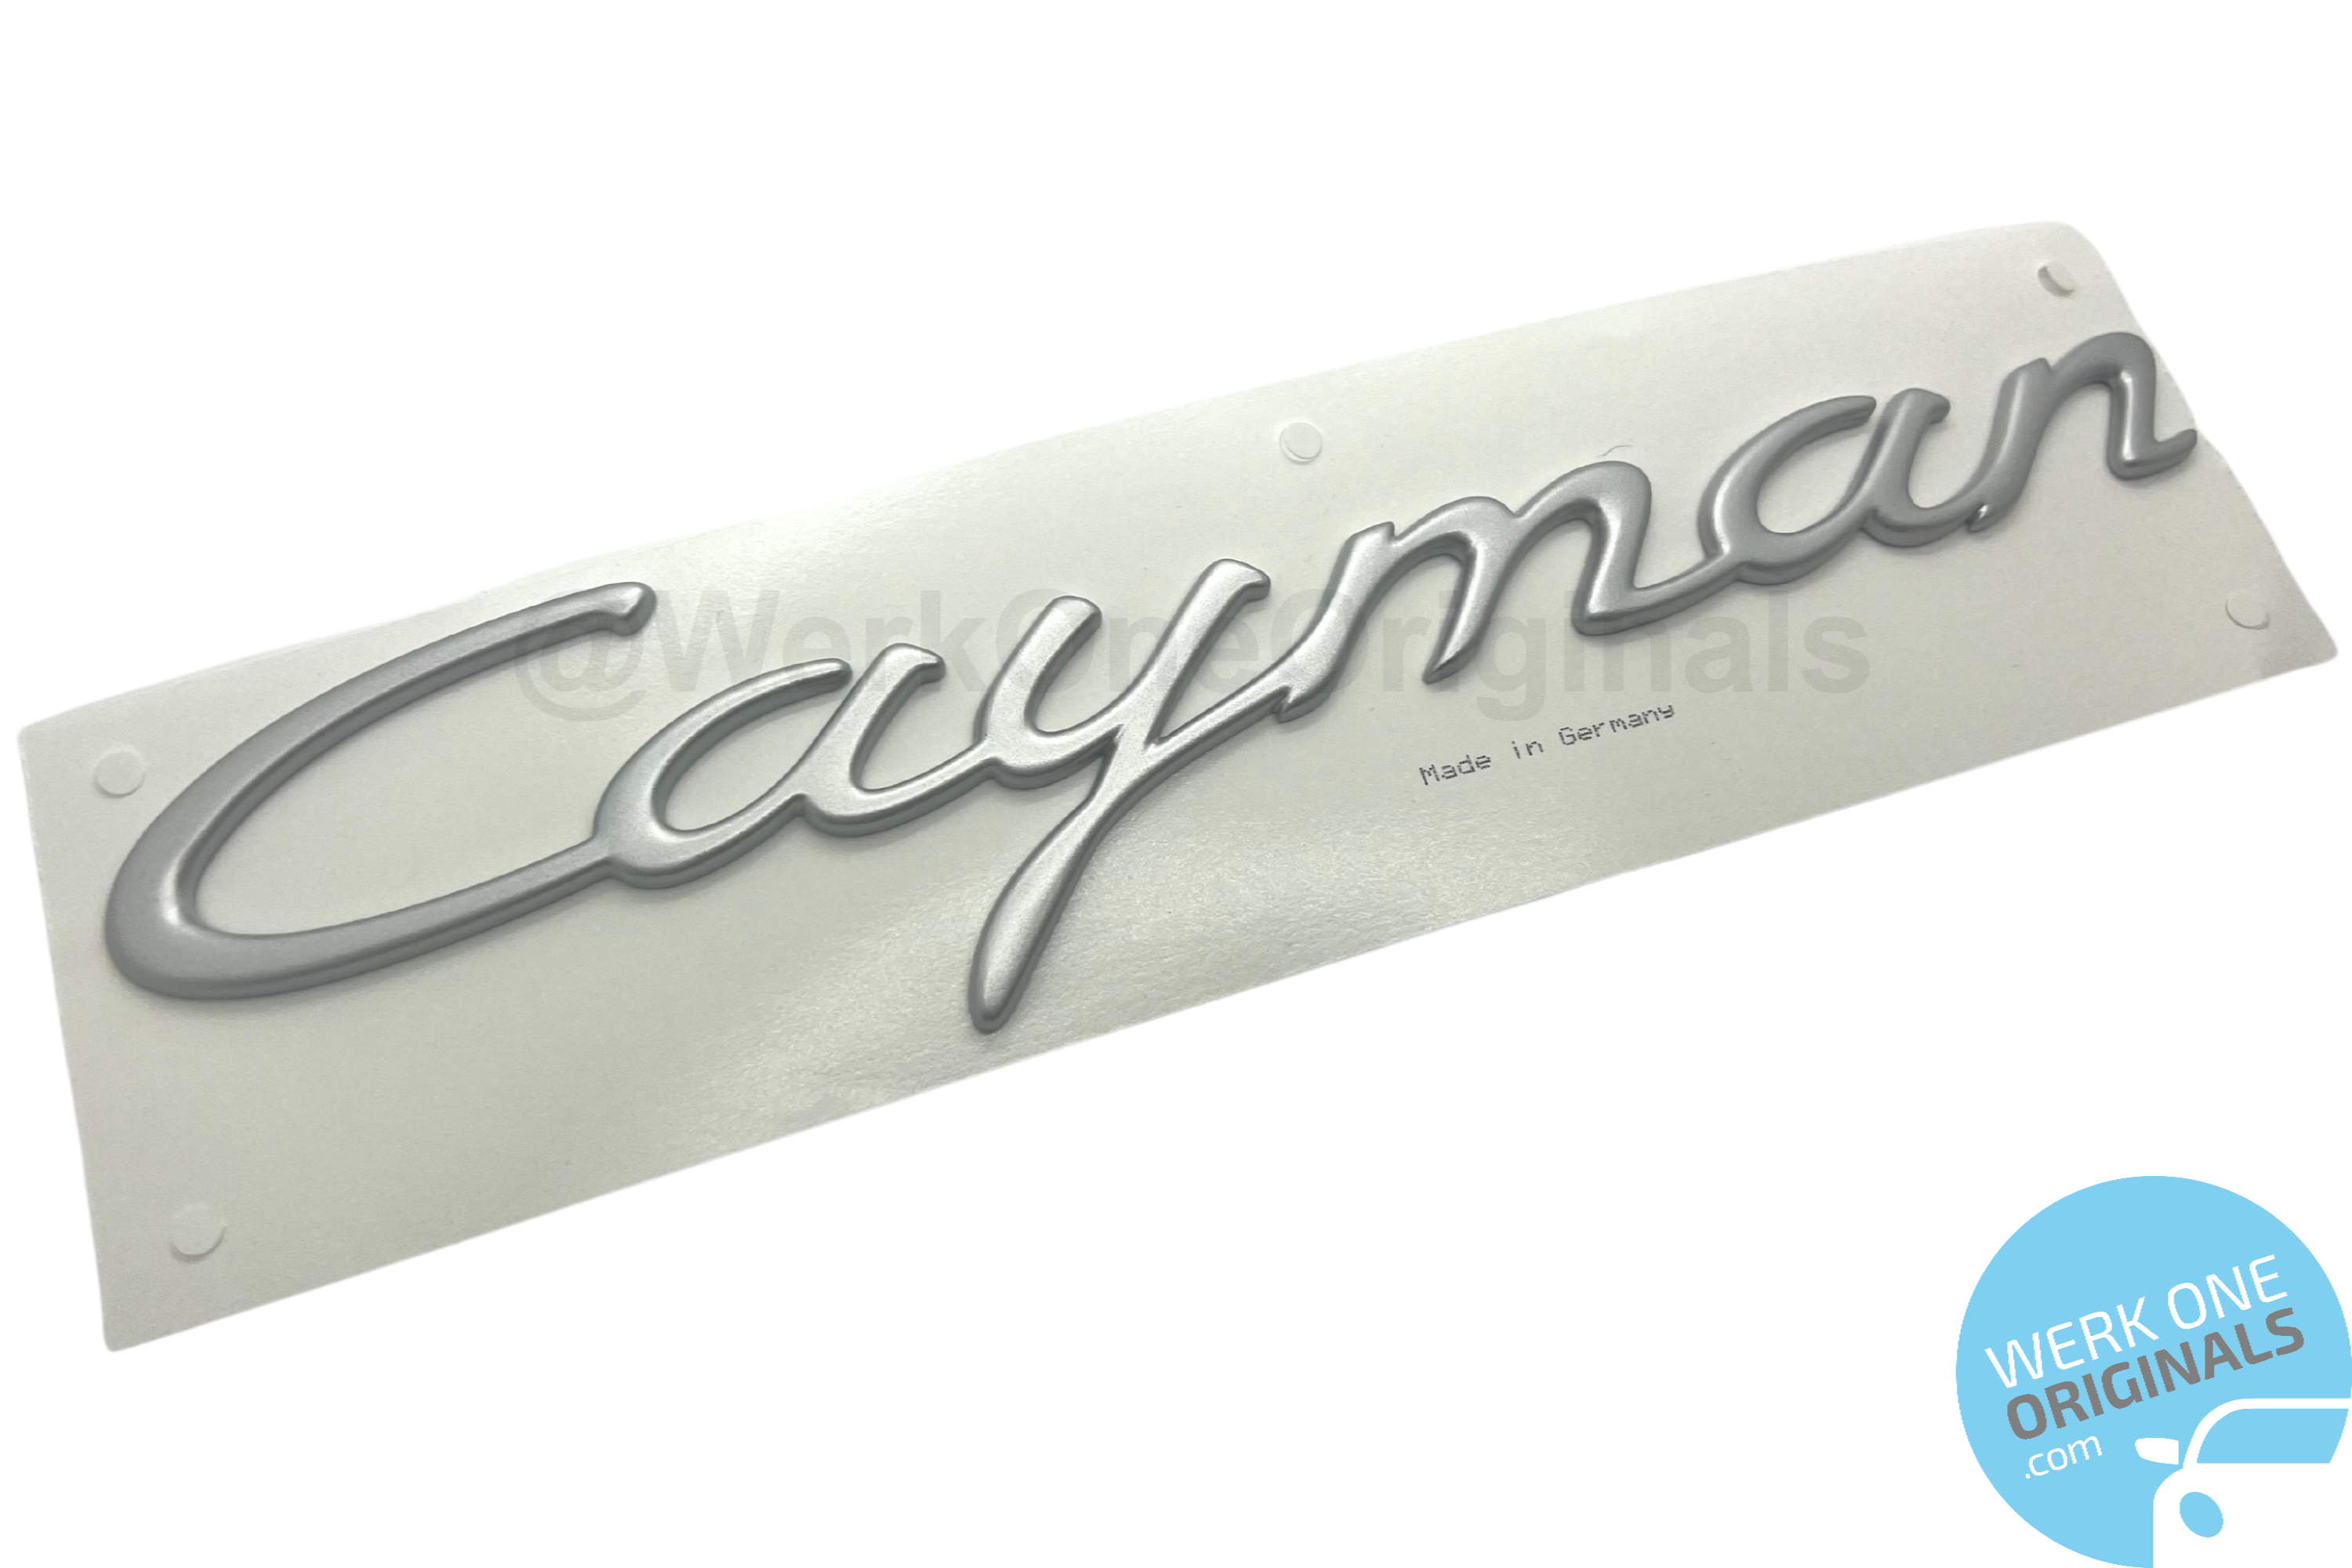 Official Porsche 'Cayman' Rear Badge in Satin Aluminium for Cayman Type 987 Models.